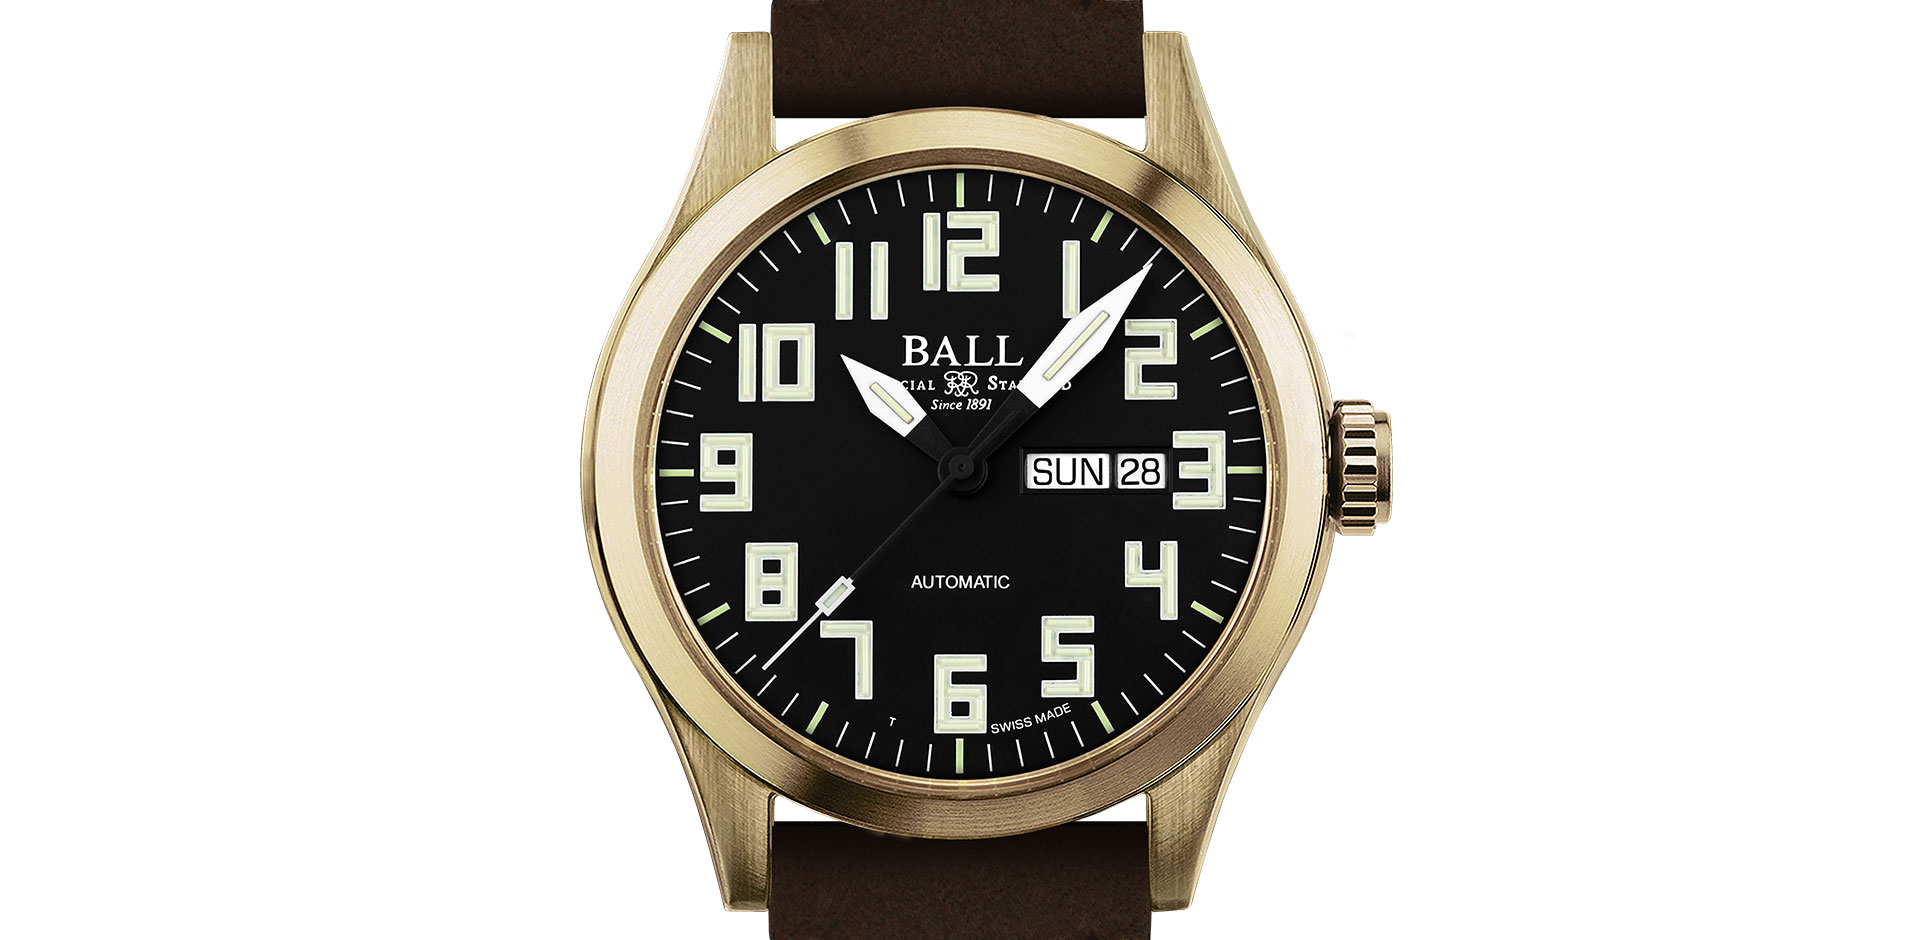 Ball Bronze Watch Flash Sales, 59% OFF | www.ingeniovirtual.com